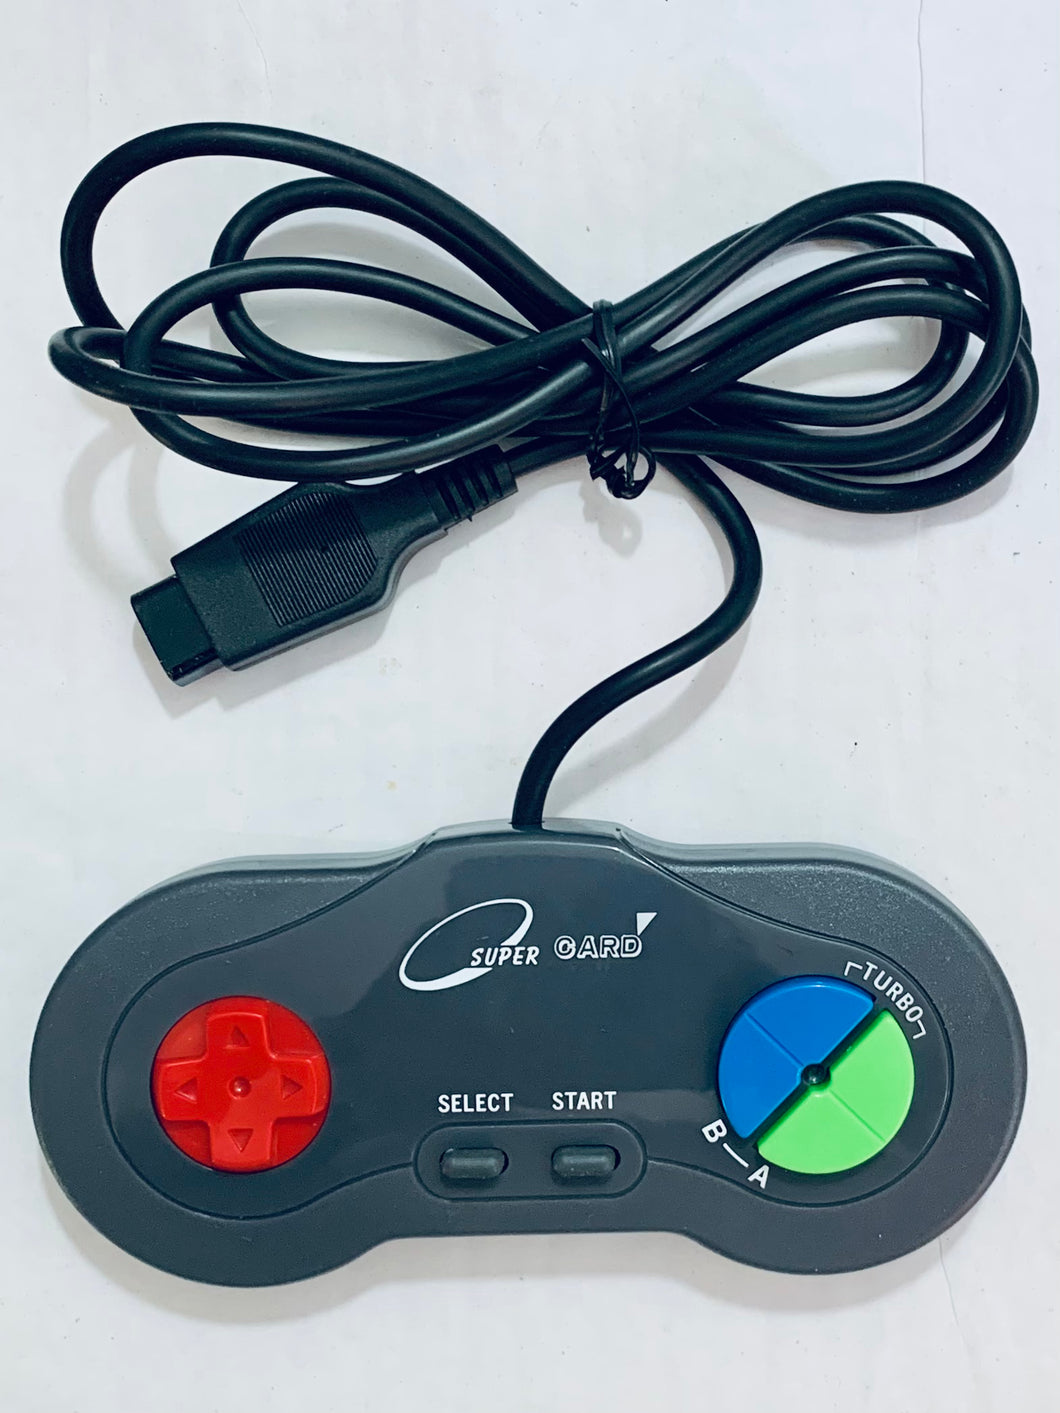 Super Card Control / Controller Pad 9 Pins - Famiclone - Atari / FC / NES - Brand New